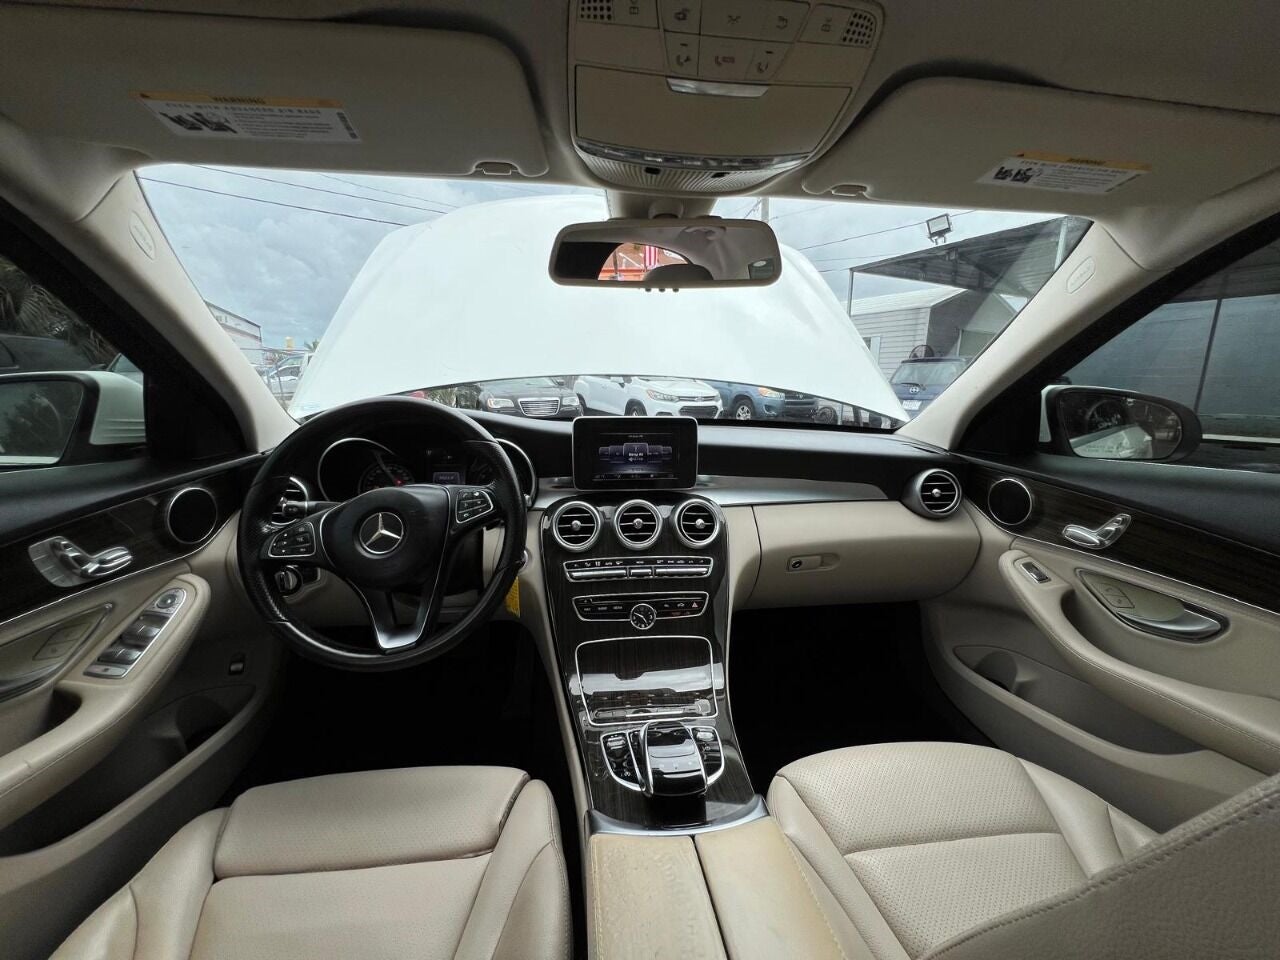 2016 Mercedes-Benz C-Class C 300 Luxury 4dr Sedan